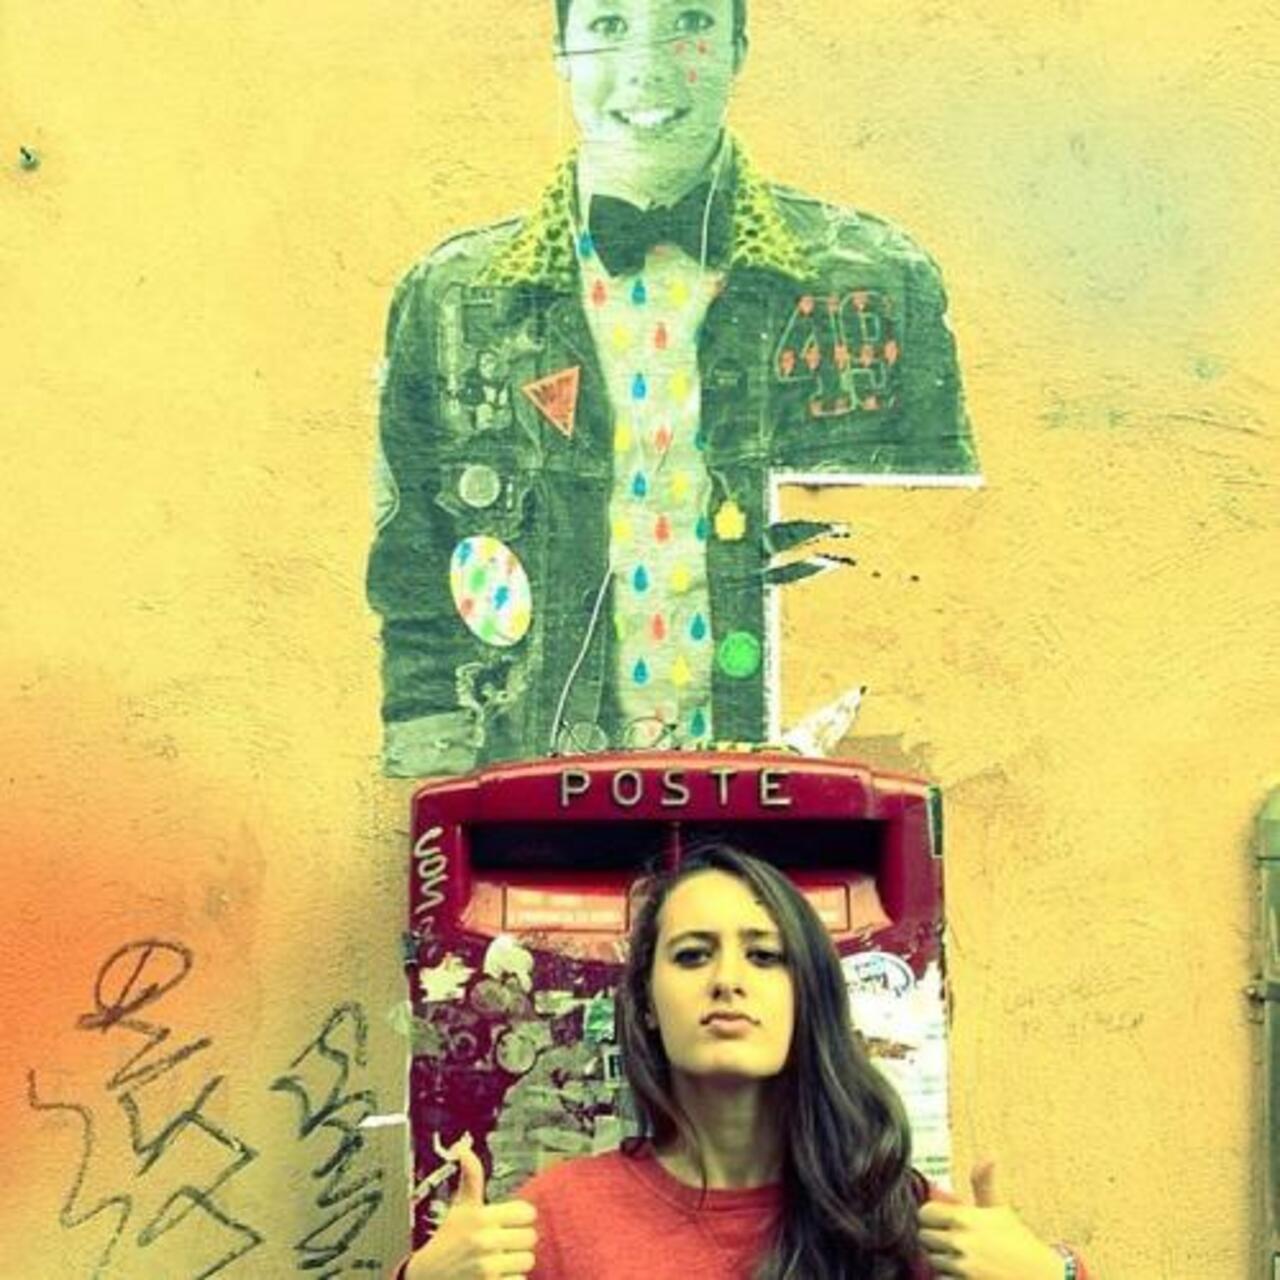 RT @Zang_Media: #streetart #stickers #stencil #murales #mural #graffiti #photo... #Art - - http://wp.me/p6qjkV-3t4 http://t.co/7muDj0NZiI